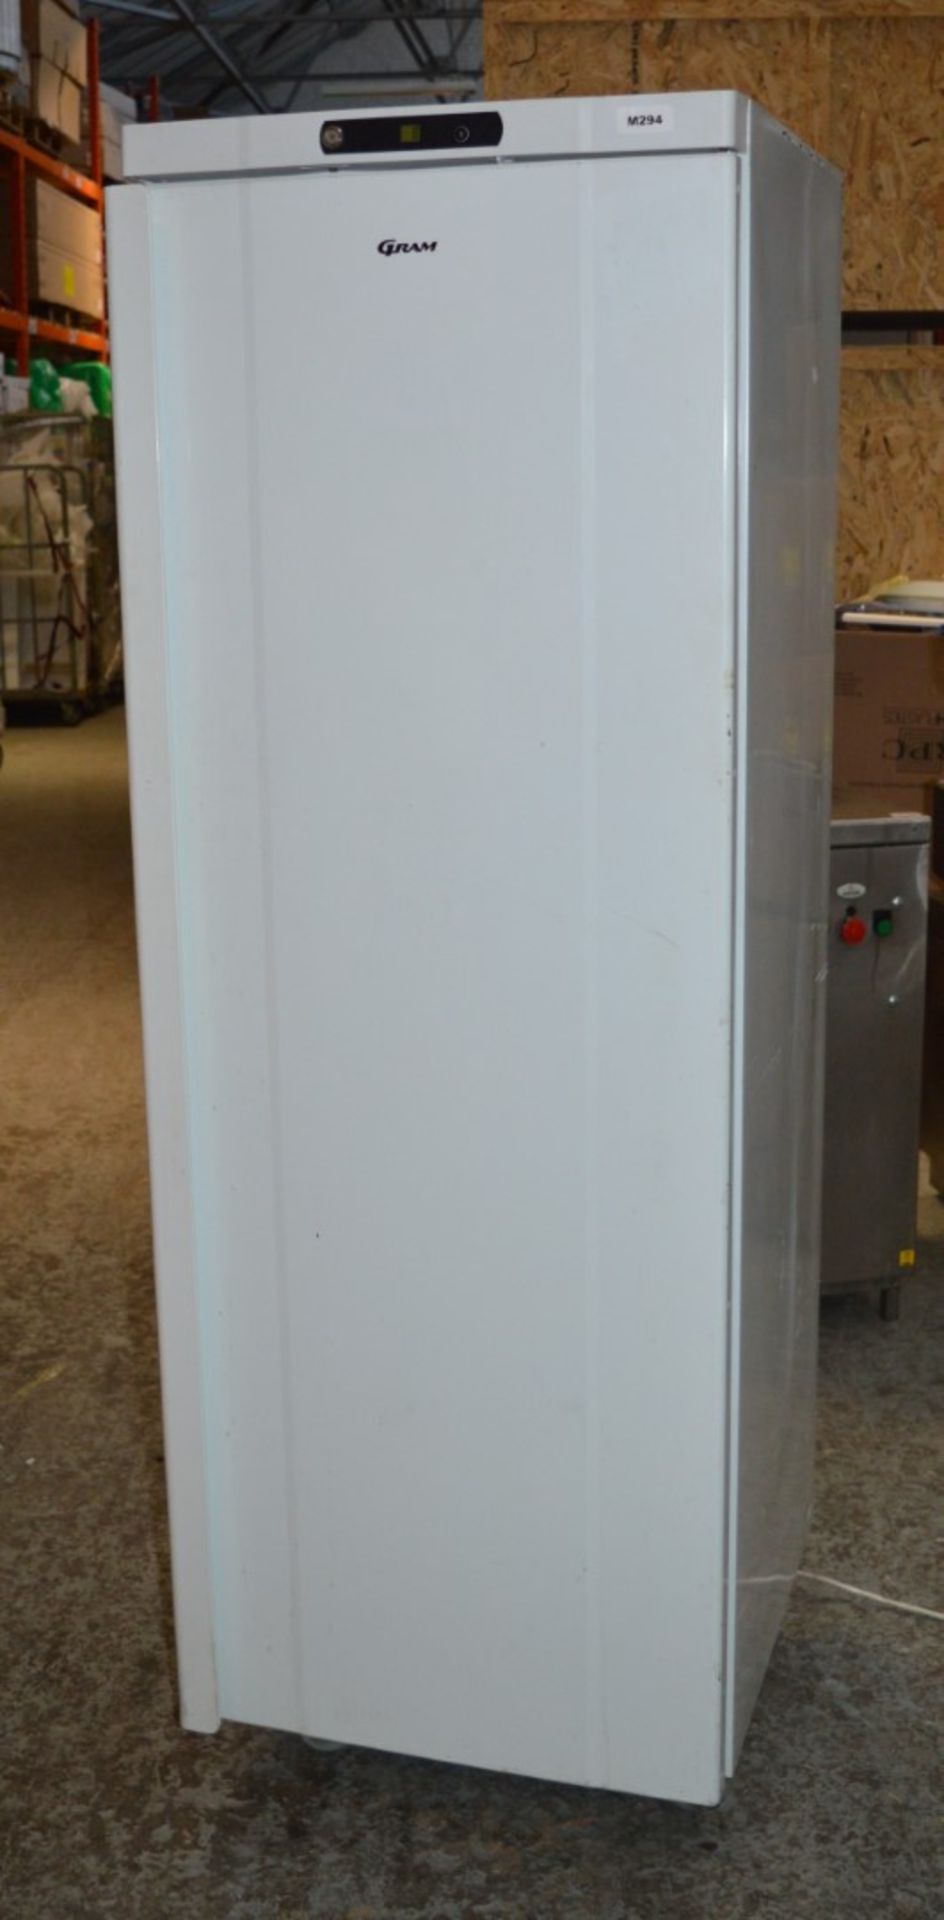 1 x Gram K400LU Commercial Refrigerator - Upright White Catering Fridge - CL295 - Ref M294 -